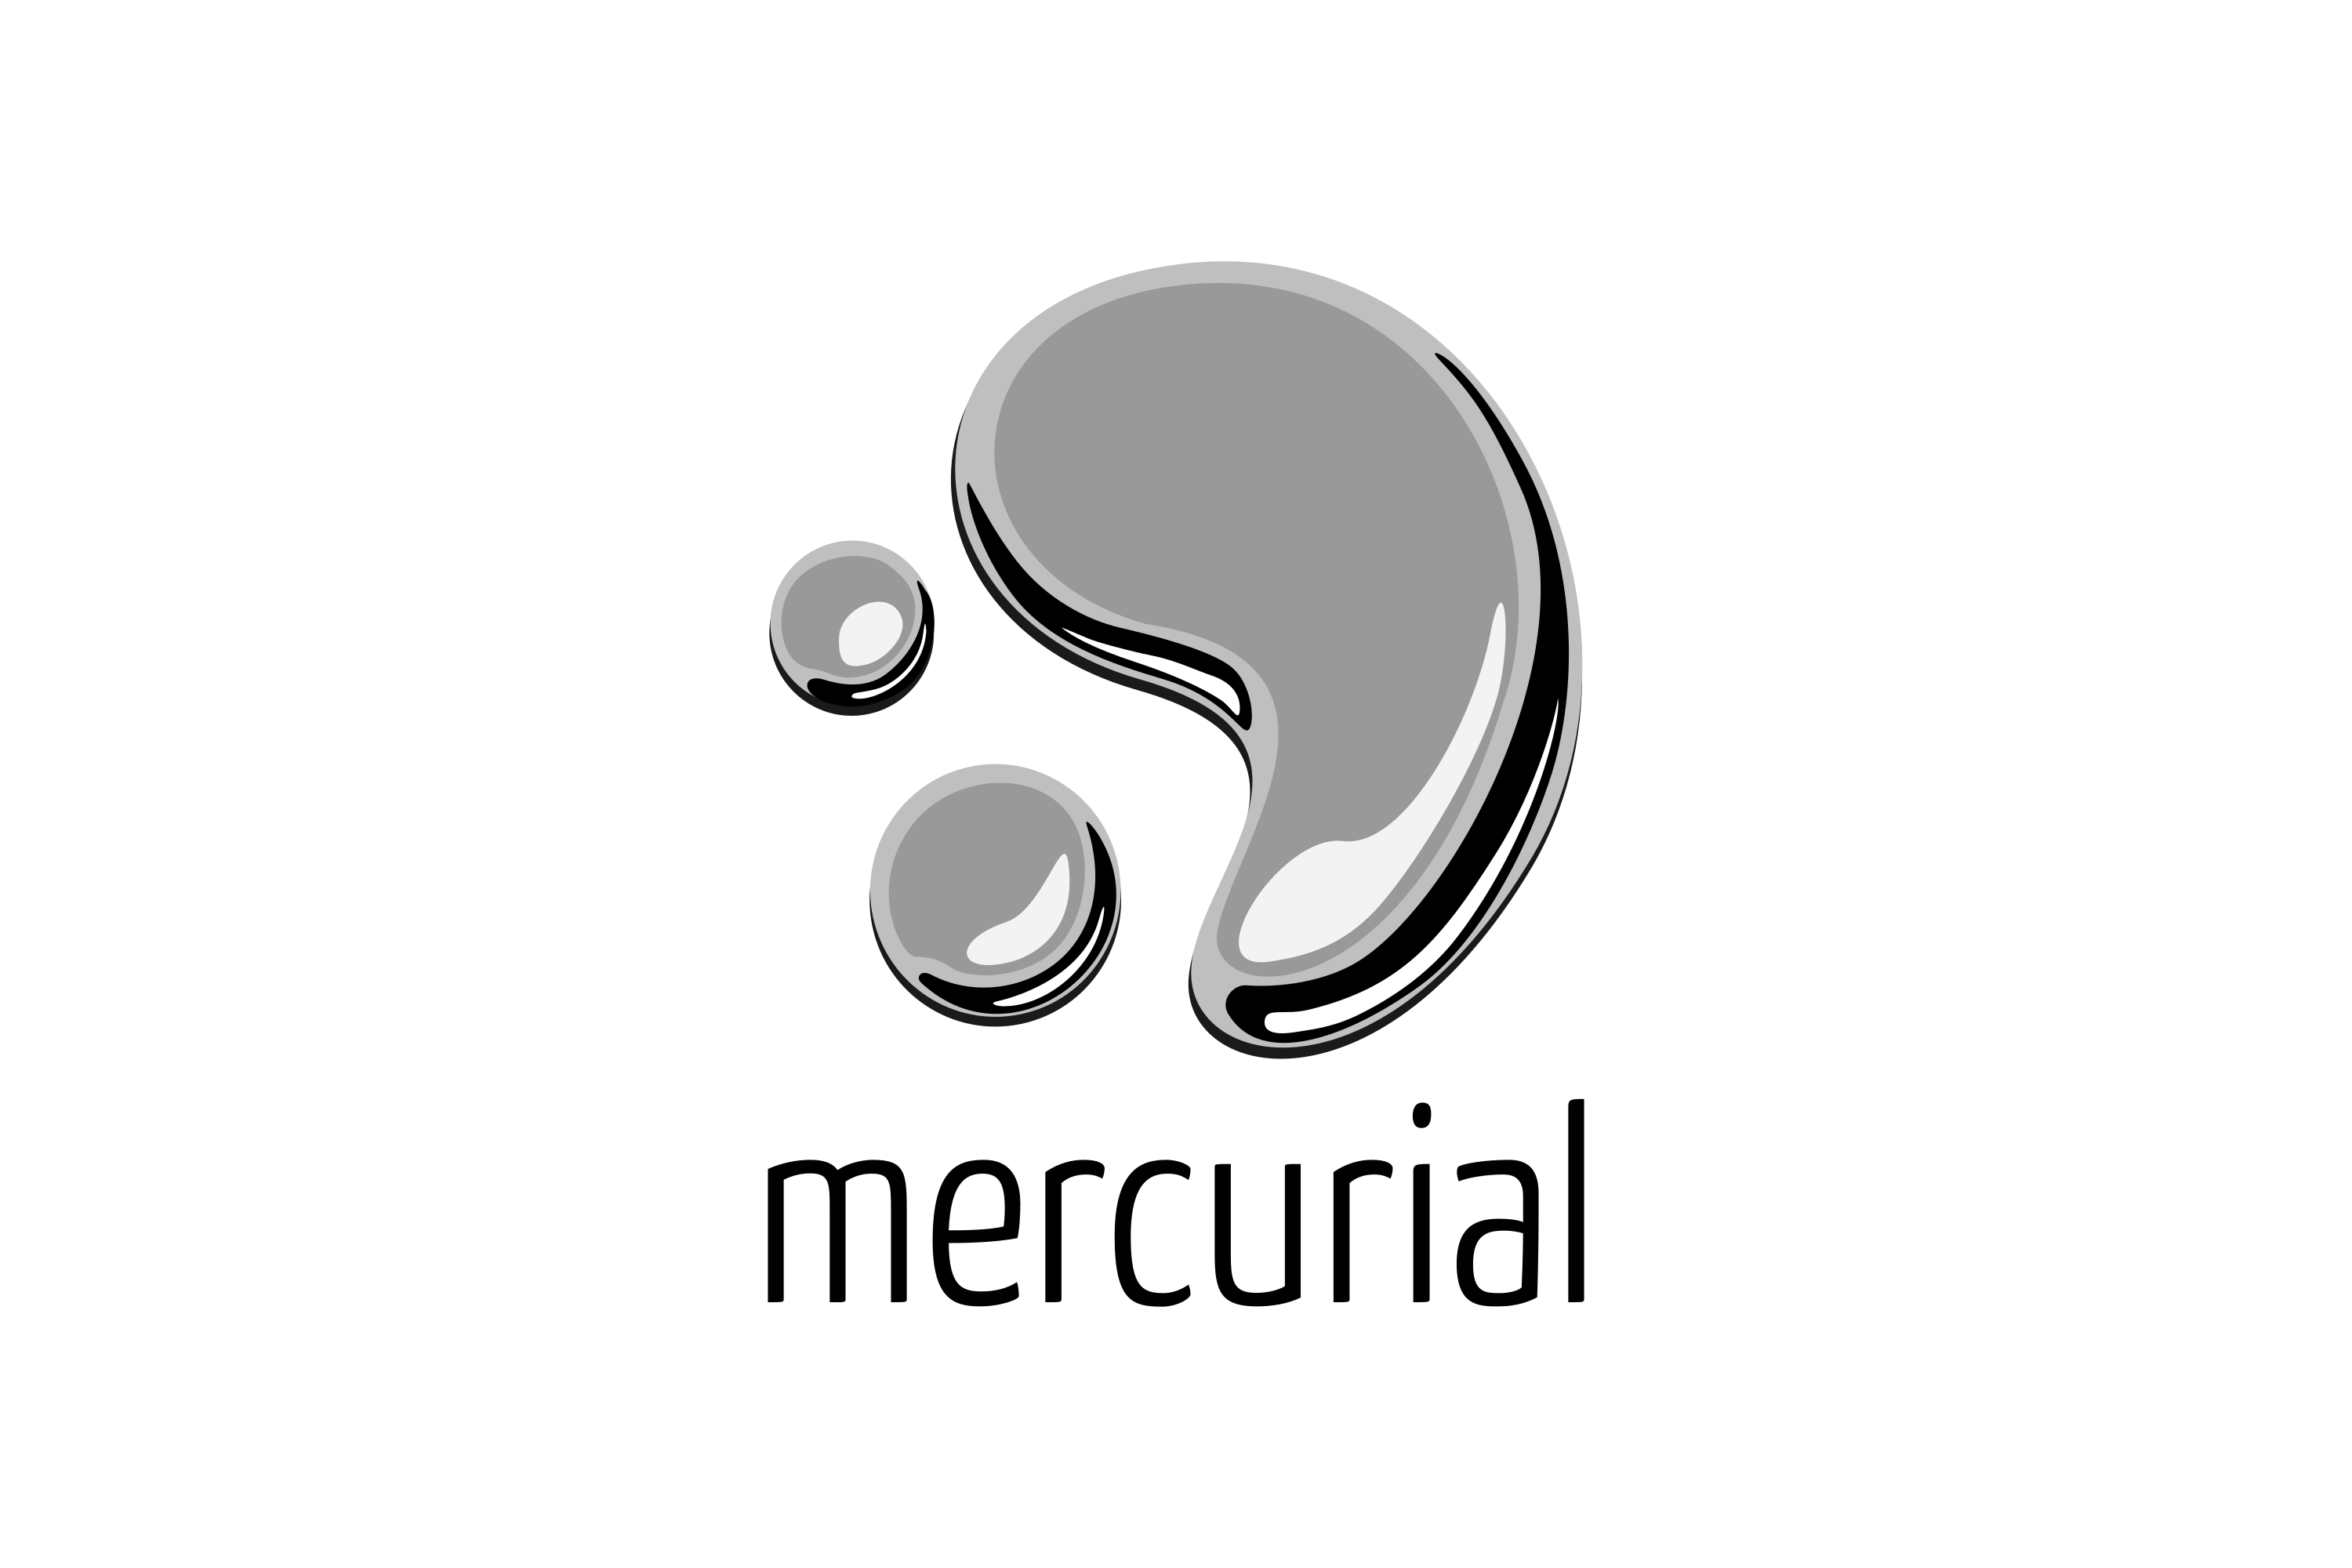 Download Mercurial (hg) Logo in SVG Vector or PNG File Format - Logo.wine